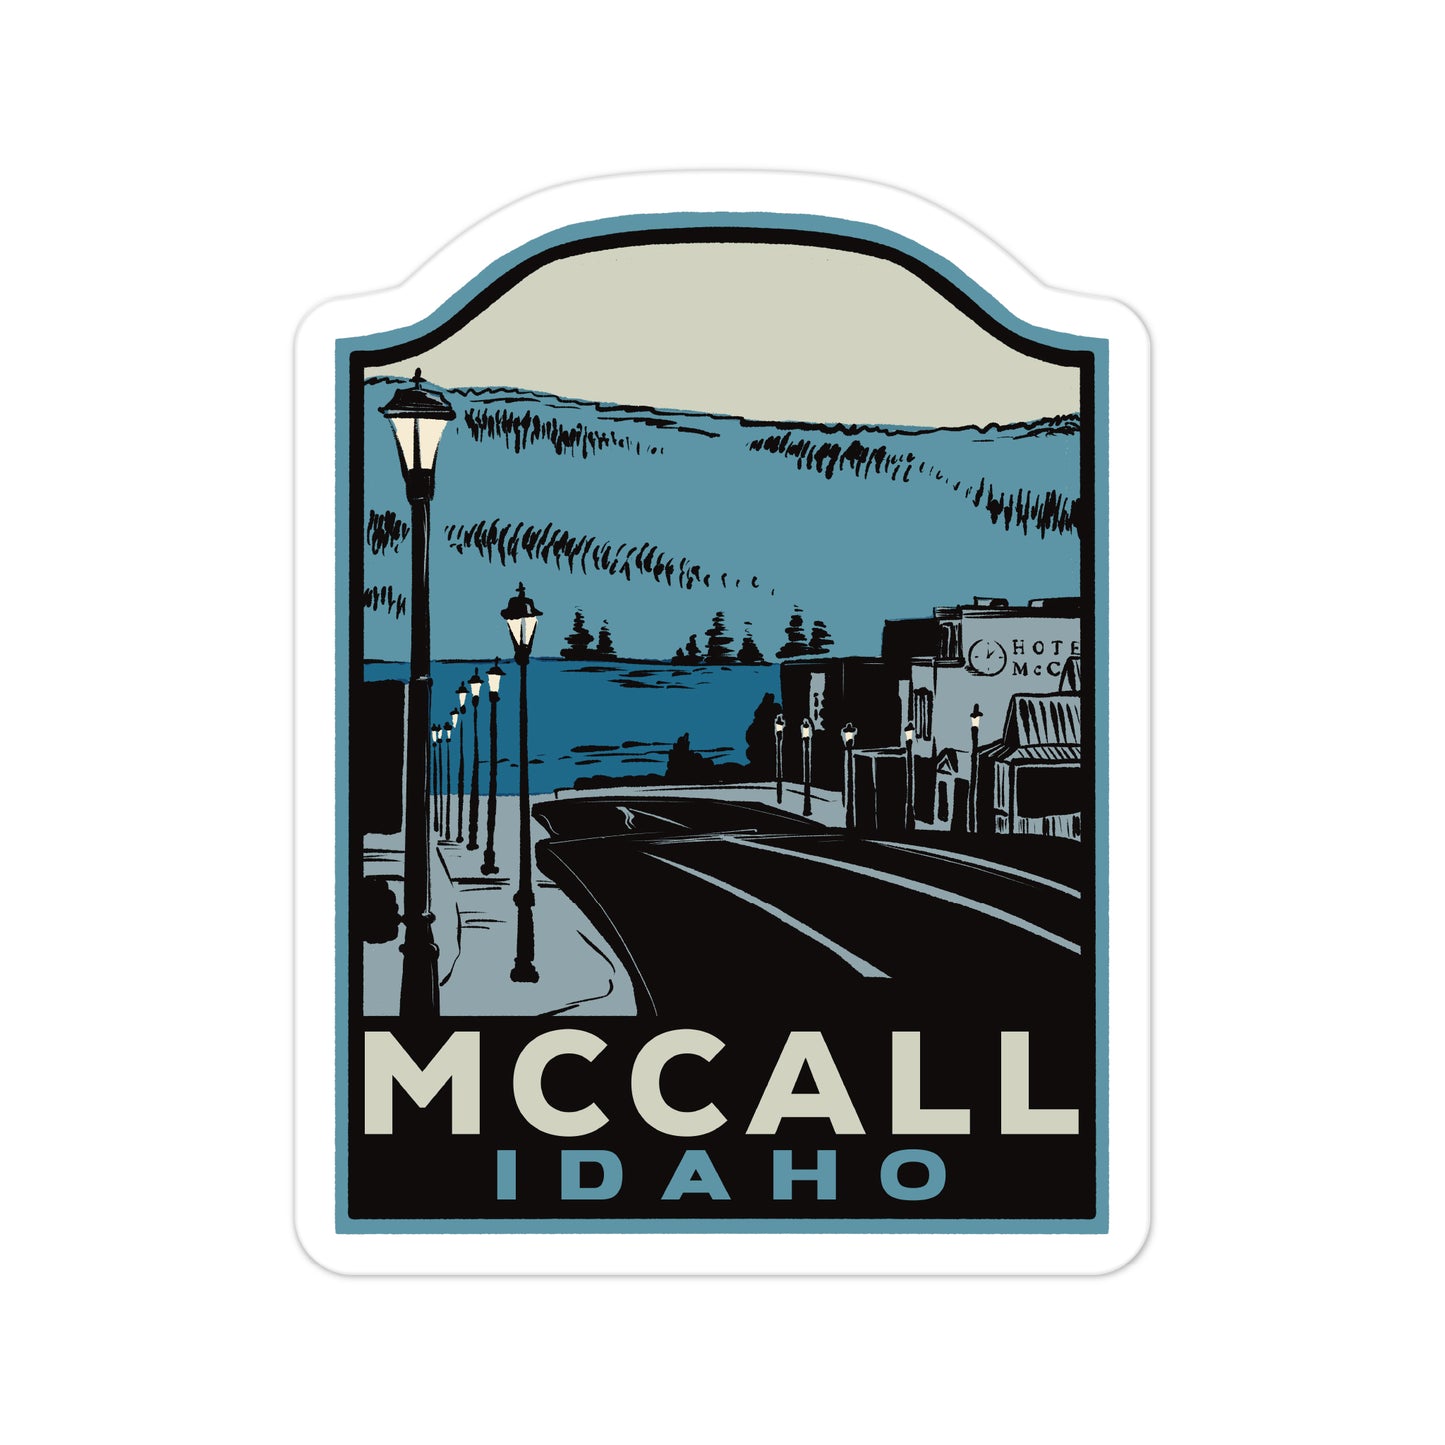 A sticker of McCall Idaho